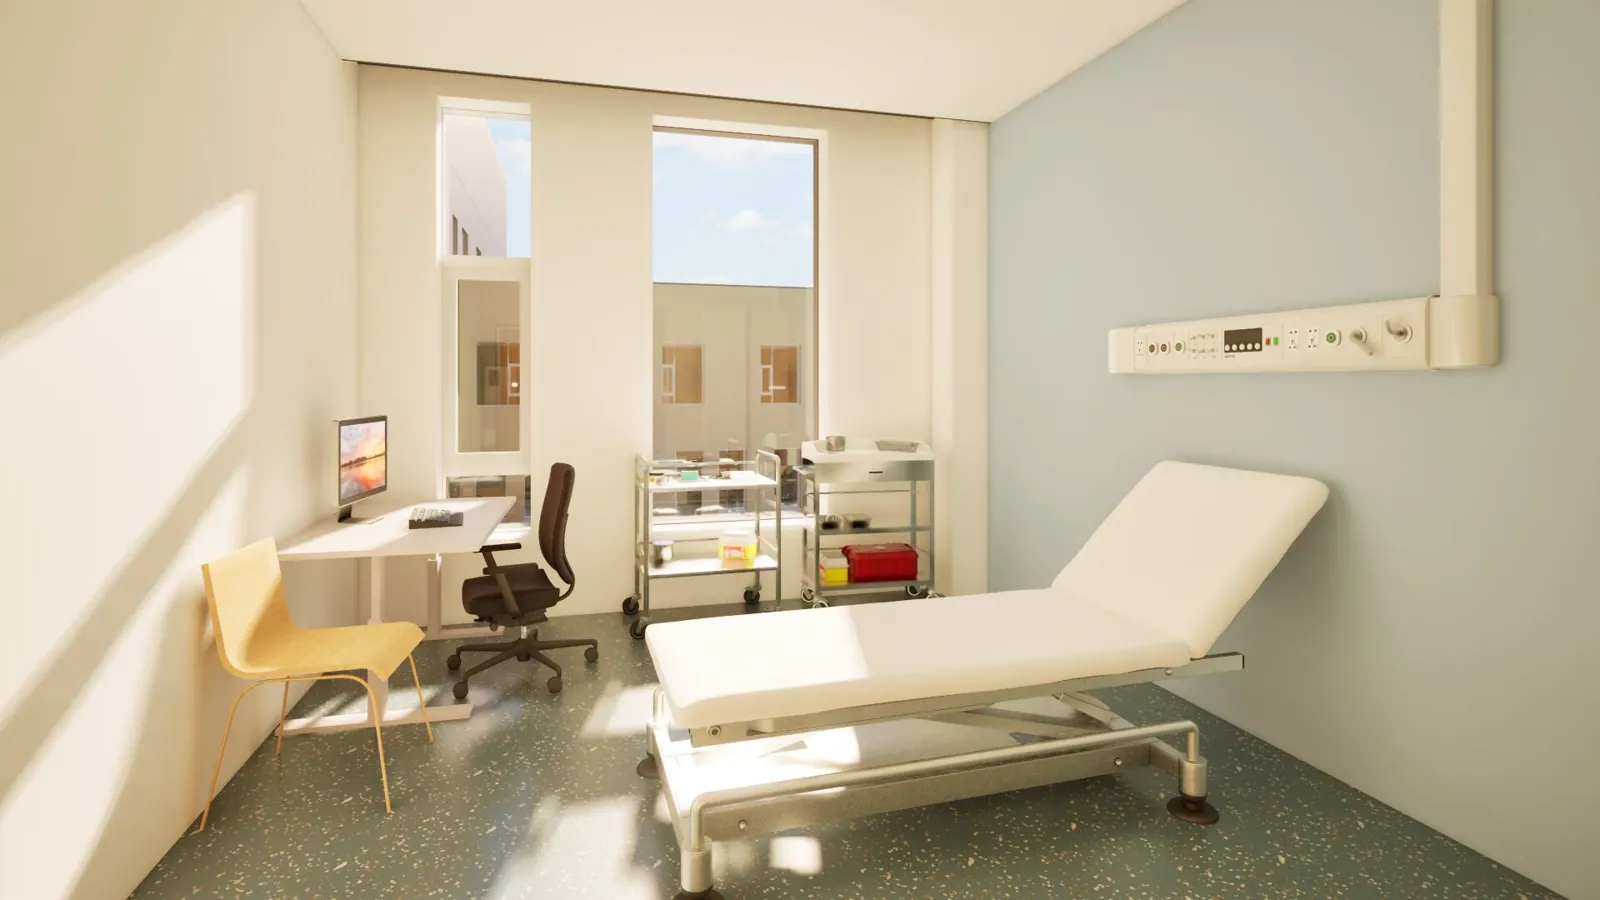 Et sykehusrom med seng og skrivebord